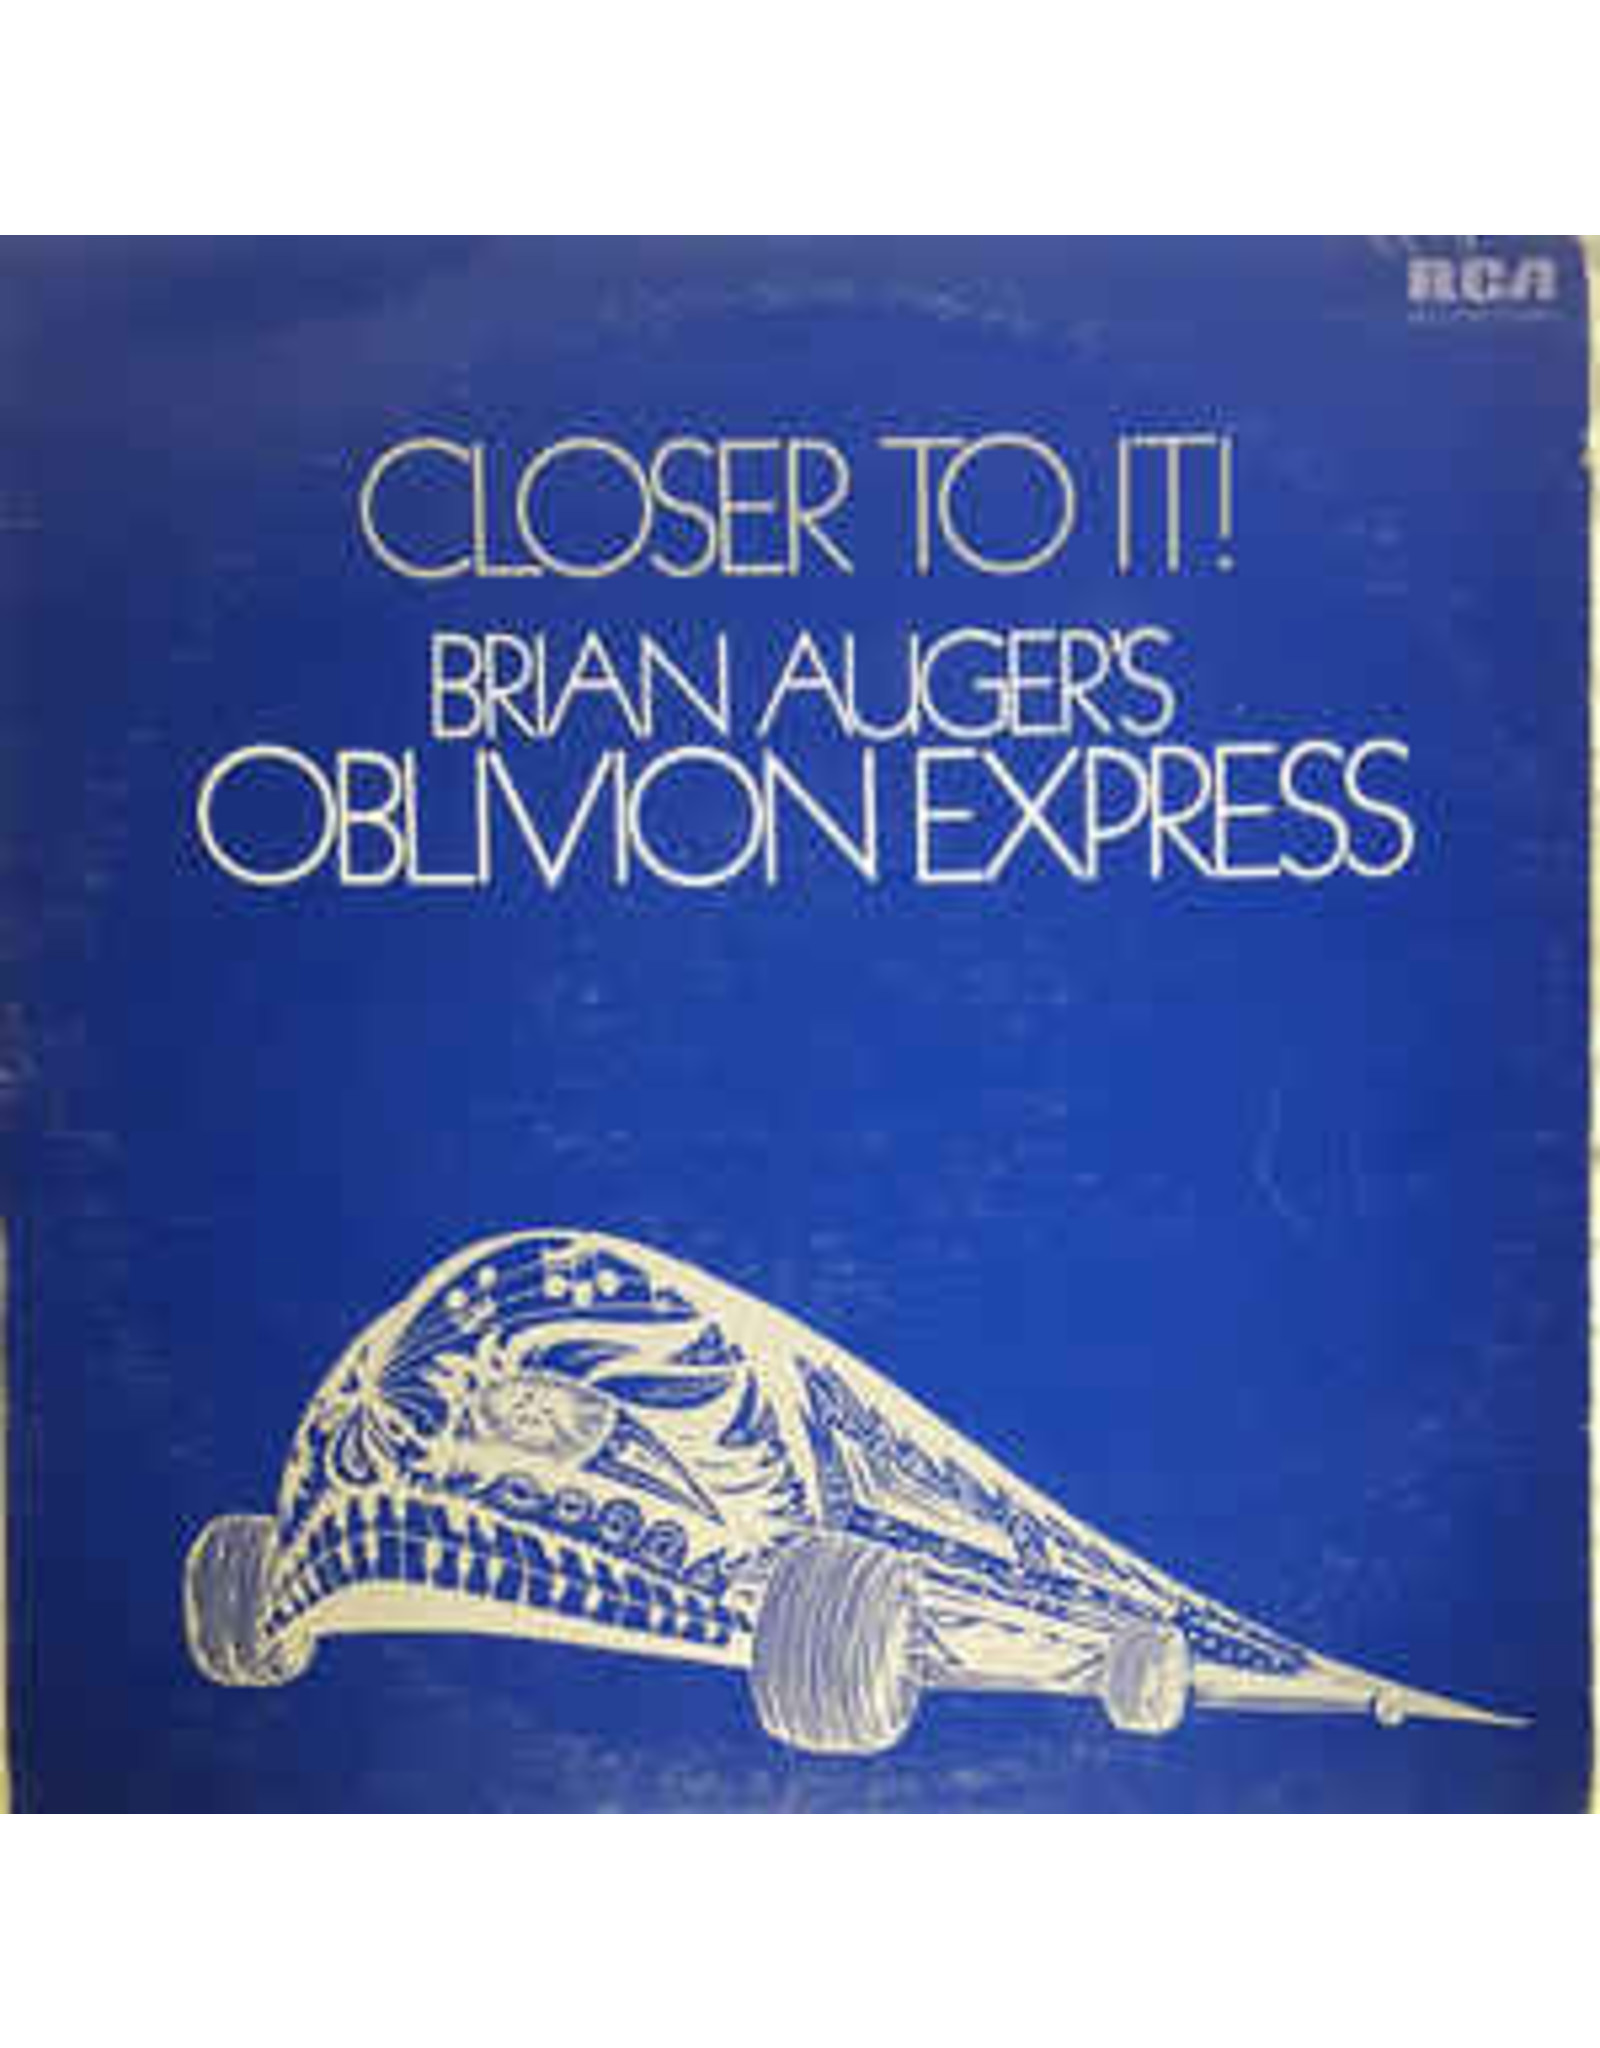 Auger, Brian Oblivion Express / Closer To It!